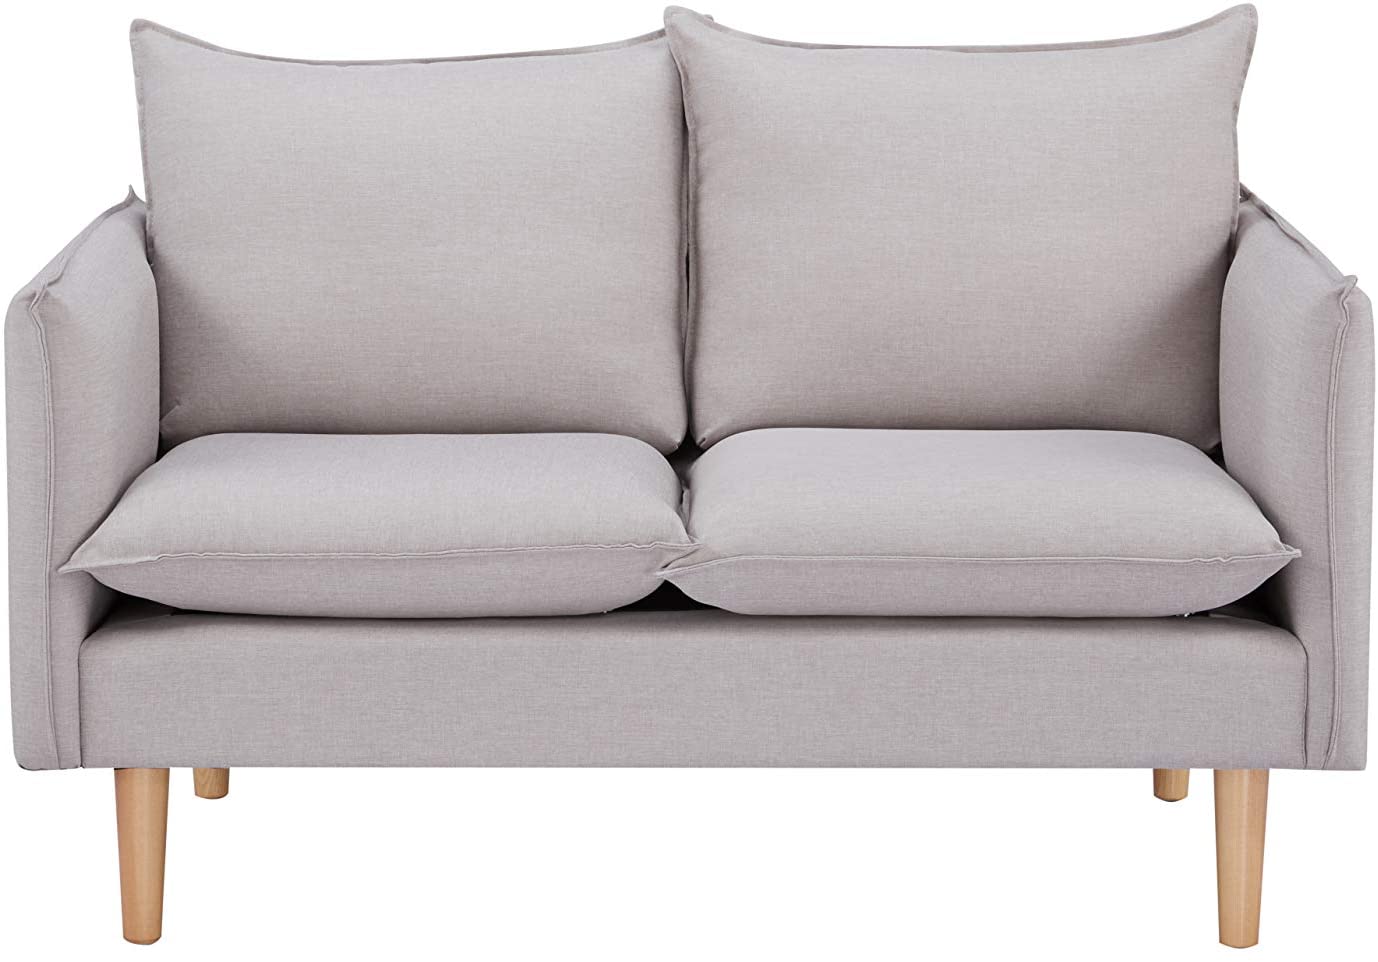 Marca Amazon - Movian Keitele - Sofá de dos plazas, 130 x 82 x 84, gris claro